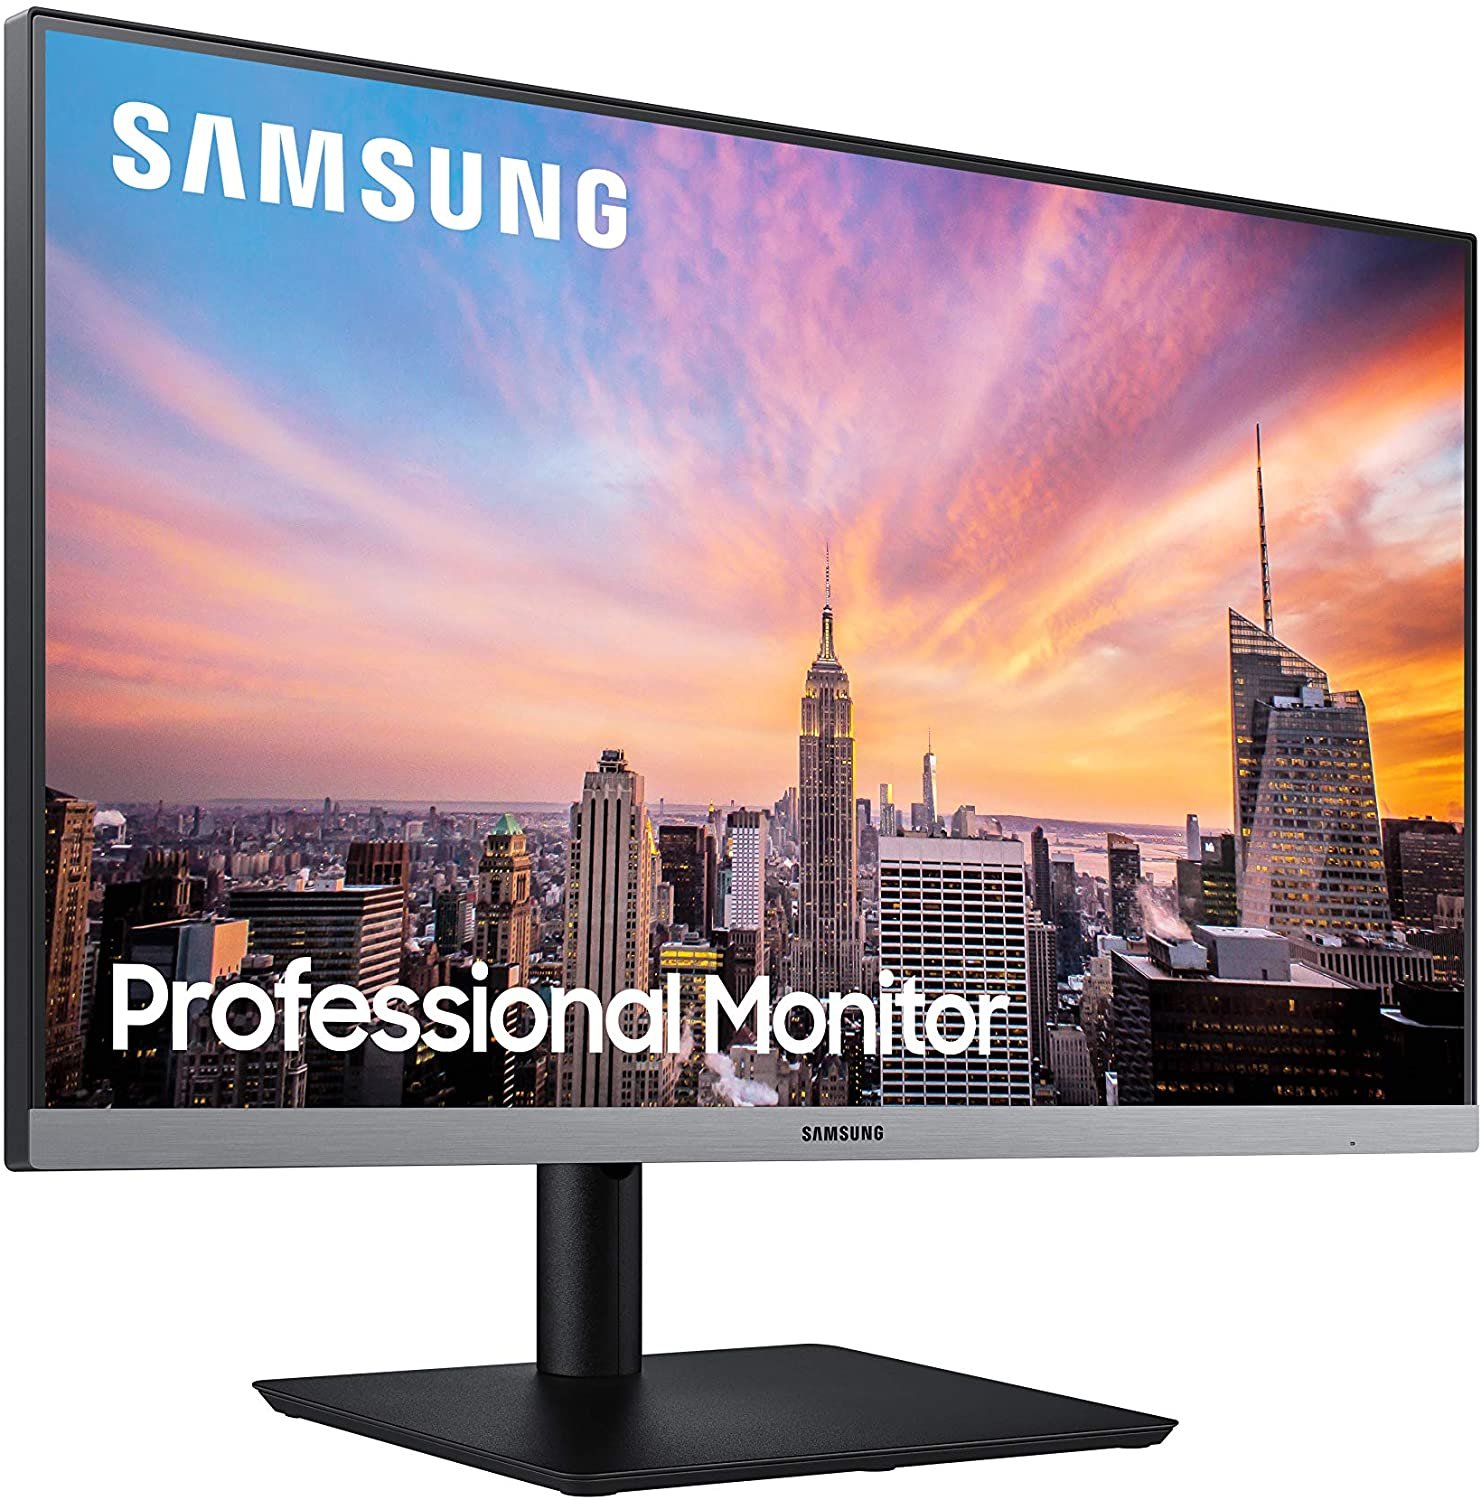 Samsung Business Computer Monitor